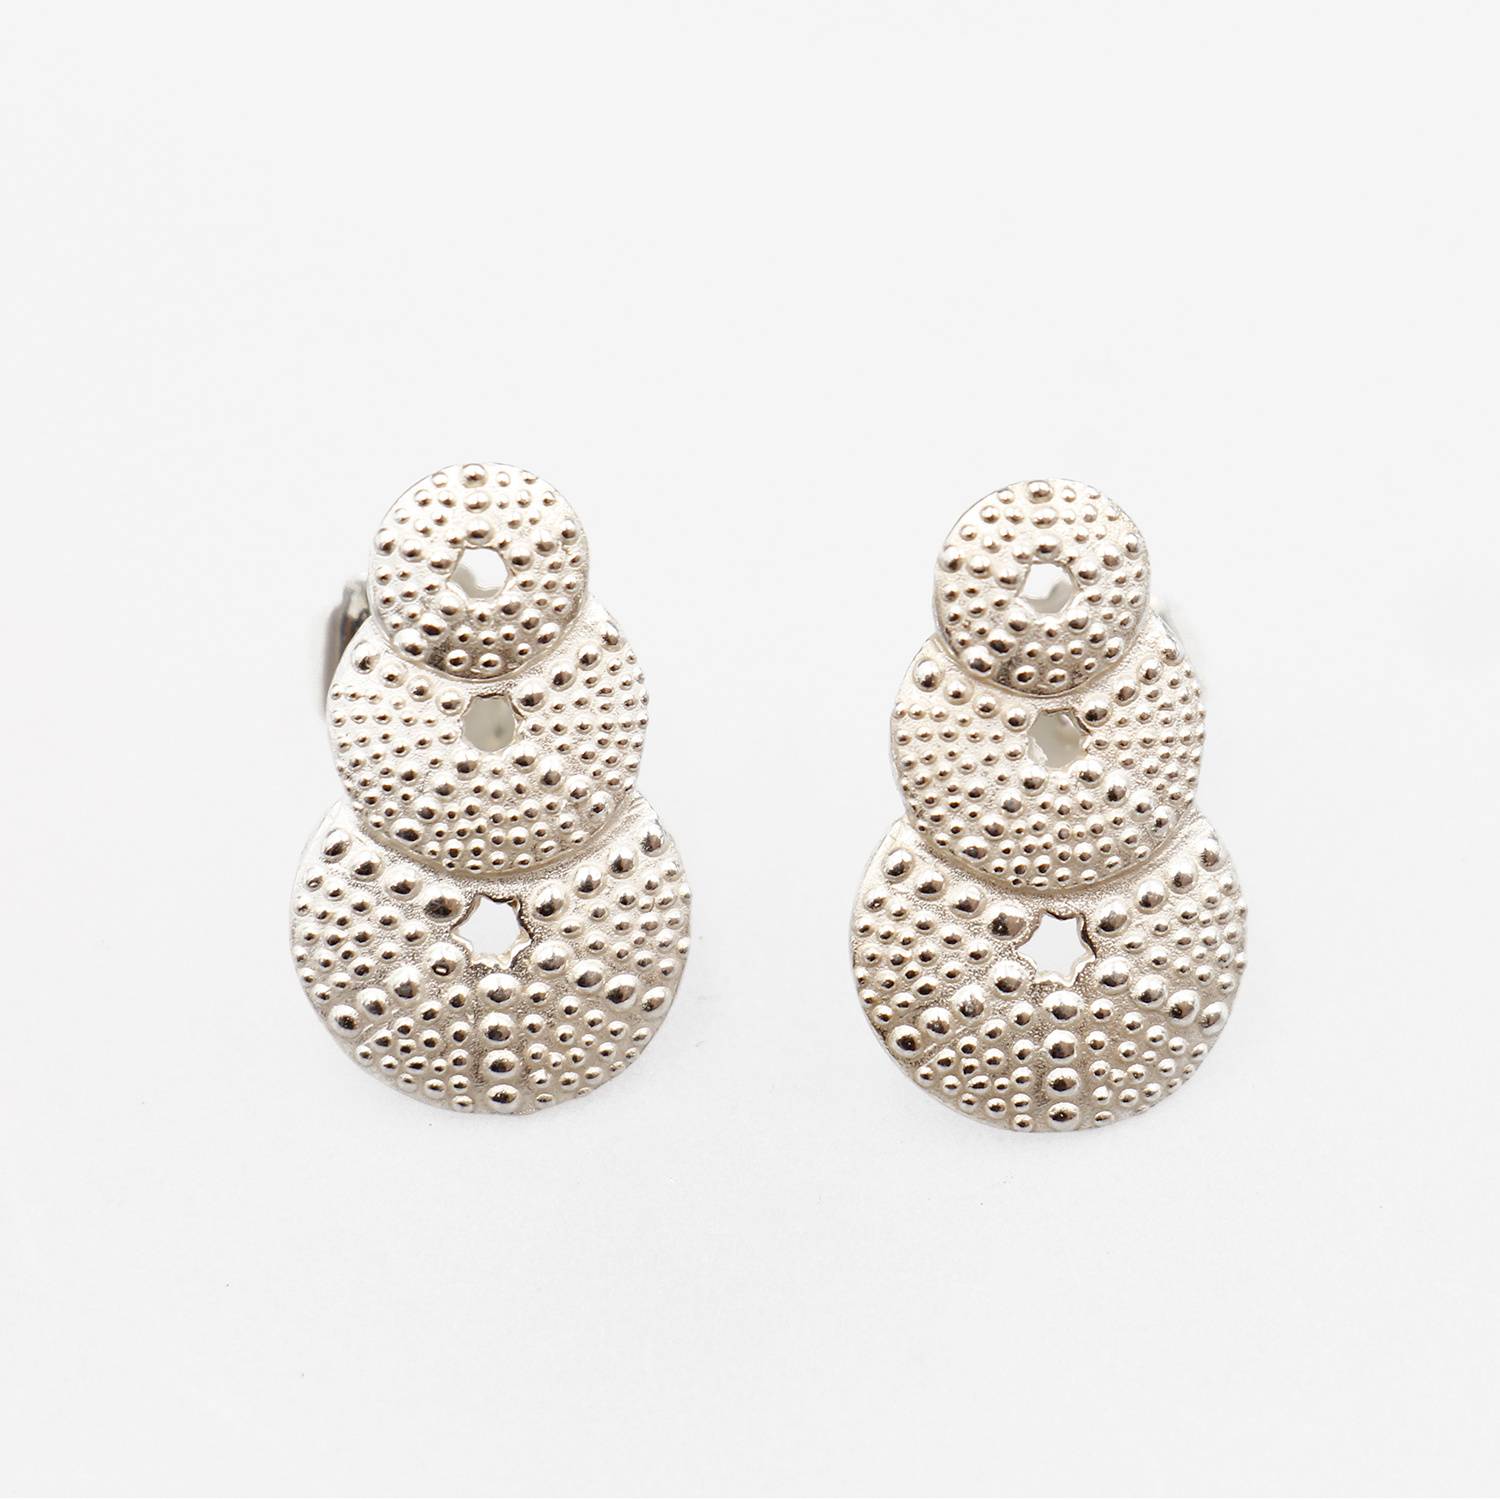 Urchin Earrings by Catherine Hills